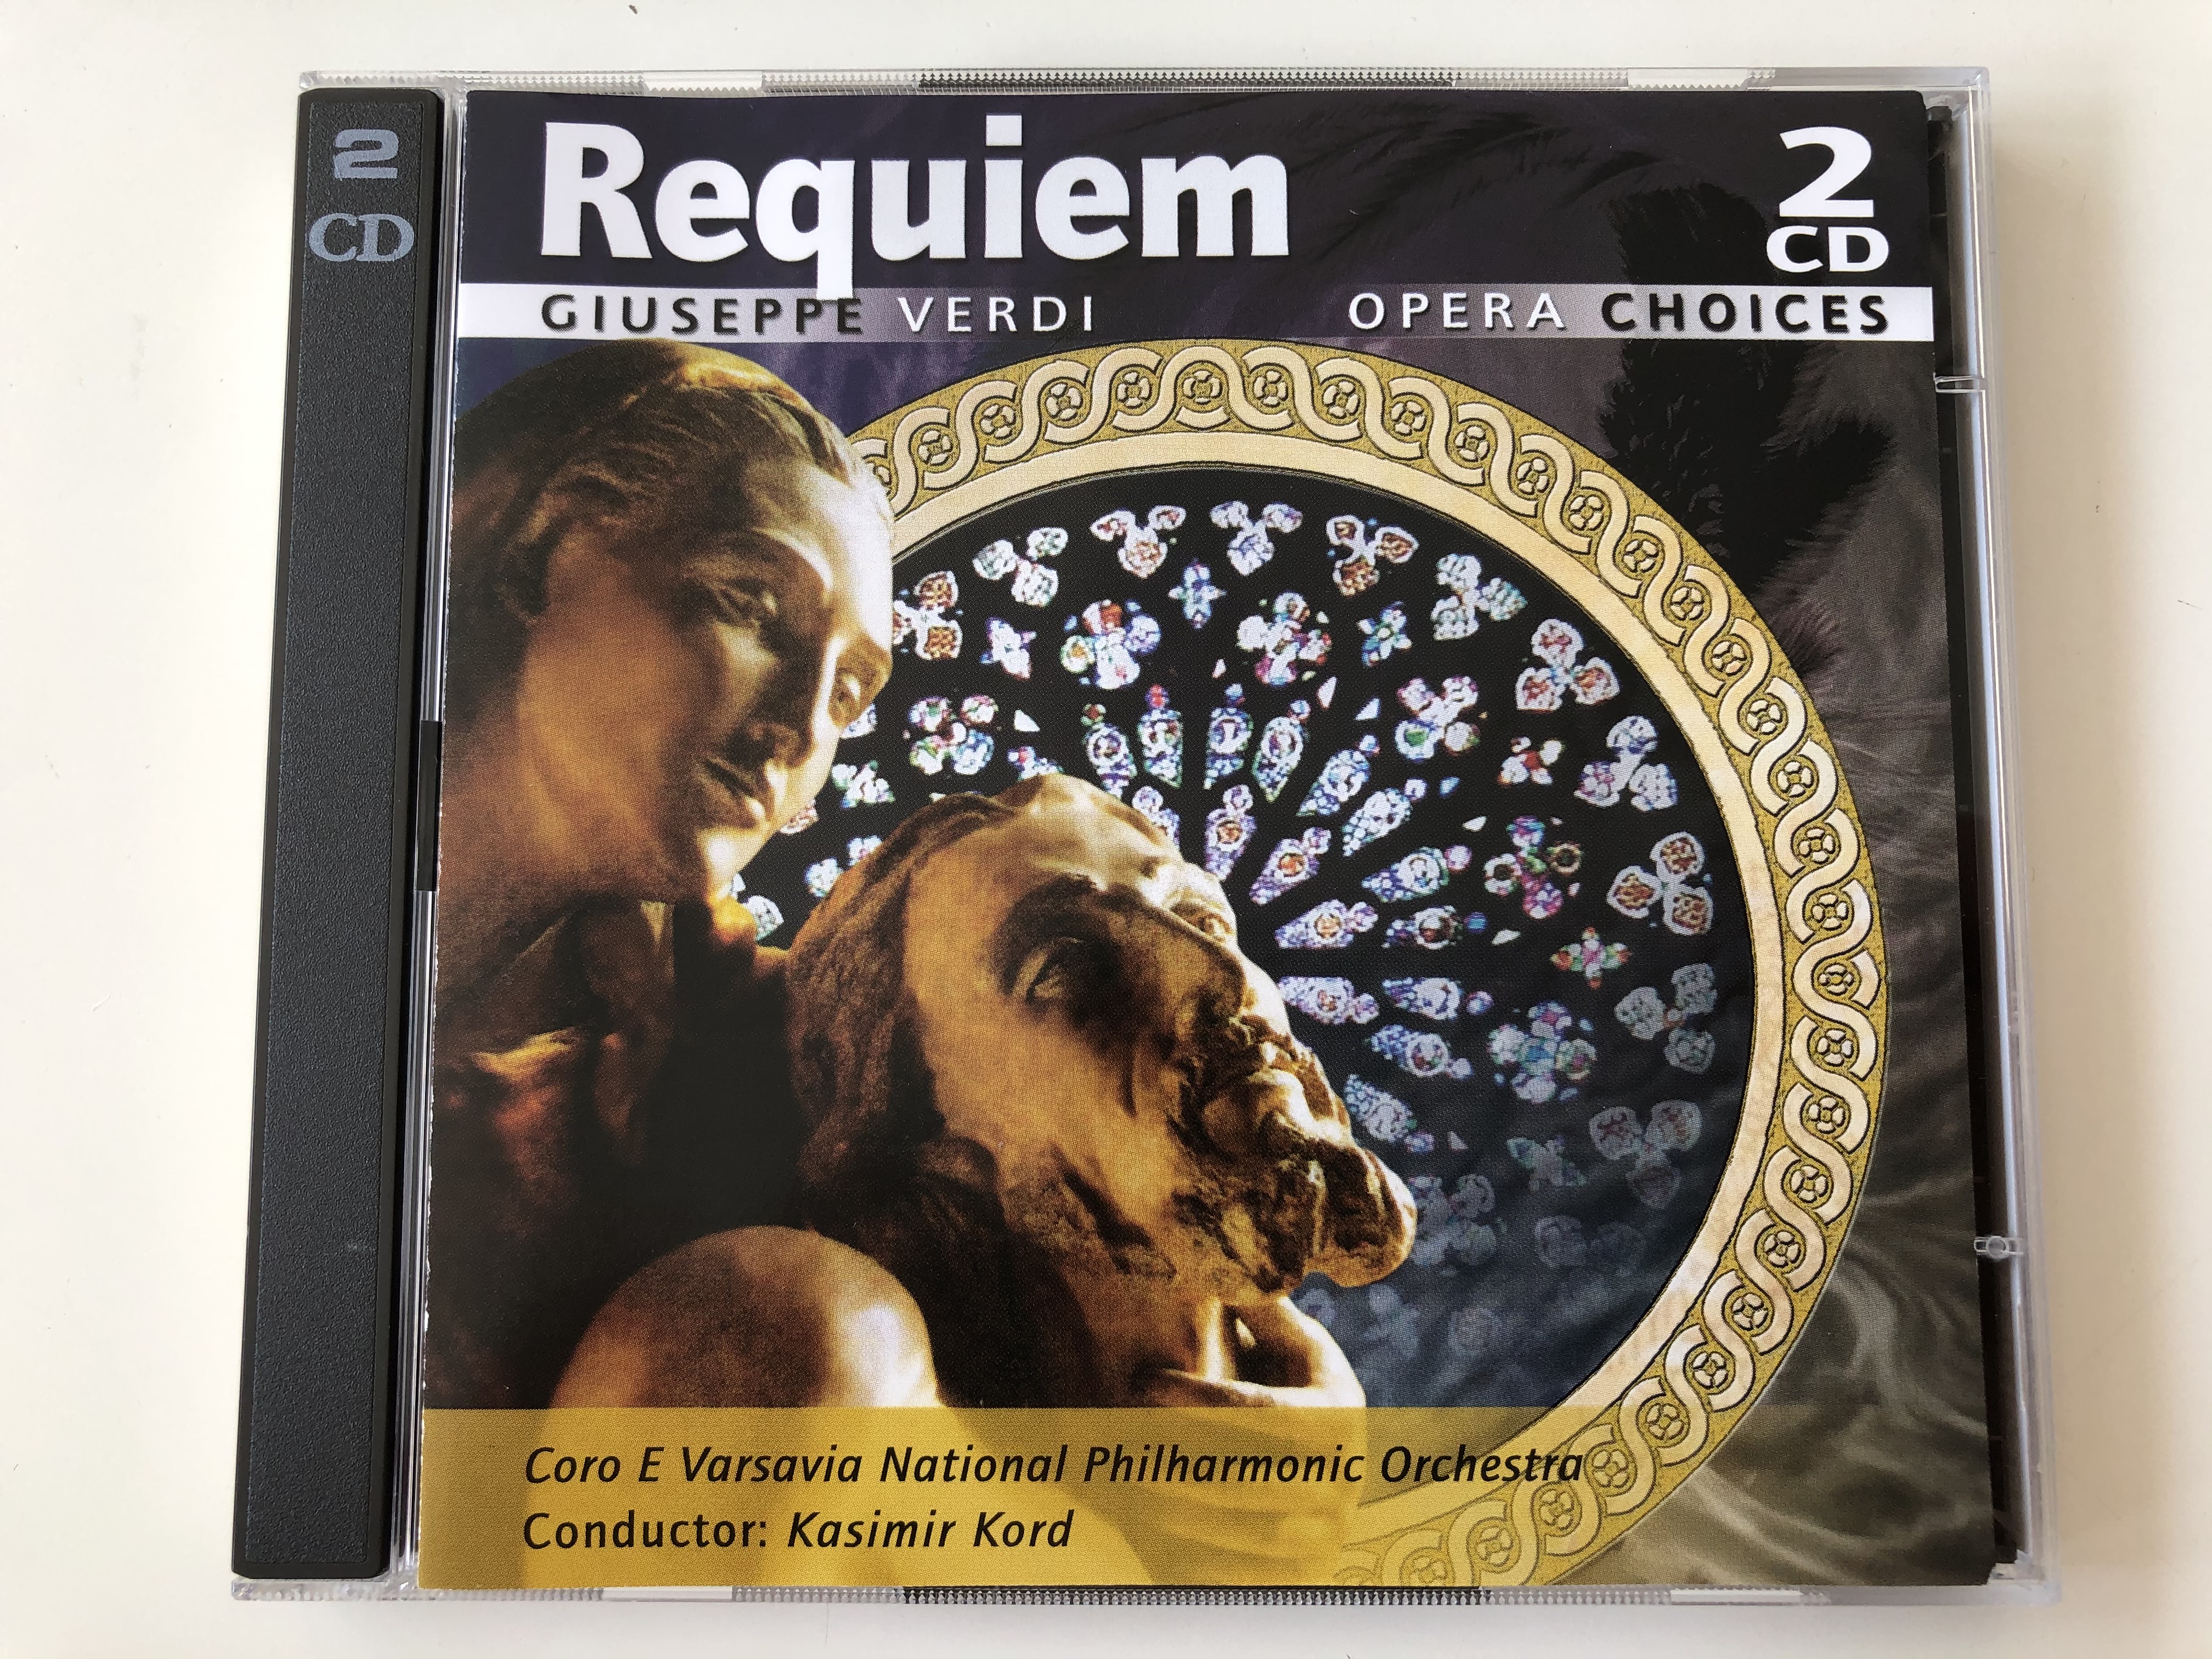 requiem-giuseppe-verdi-coro-e-varsavia-national-philharmonic-orchestra-conductor-kasimir-kord-opera-choices-2x-audio-cd-2006-oc212-1-.jpg